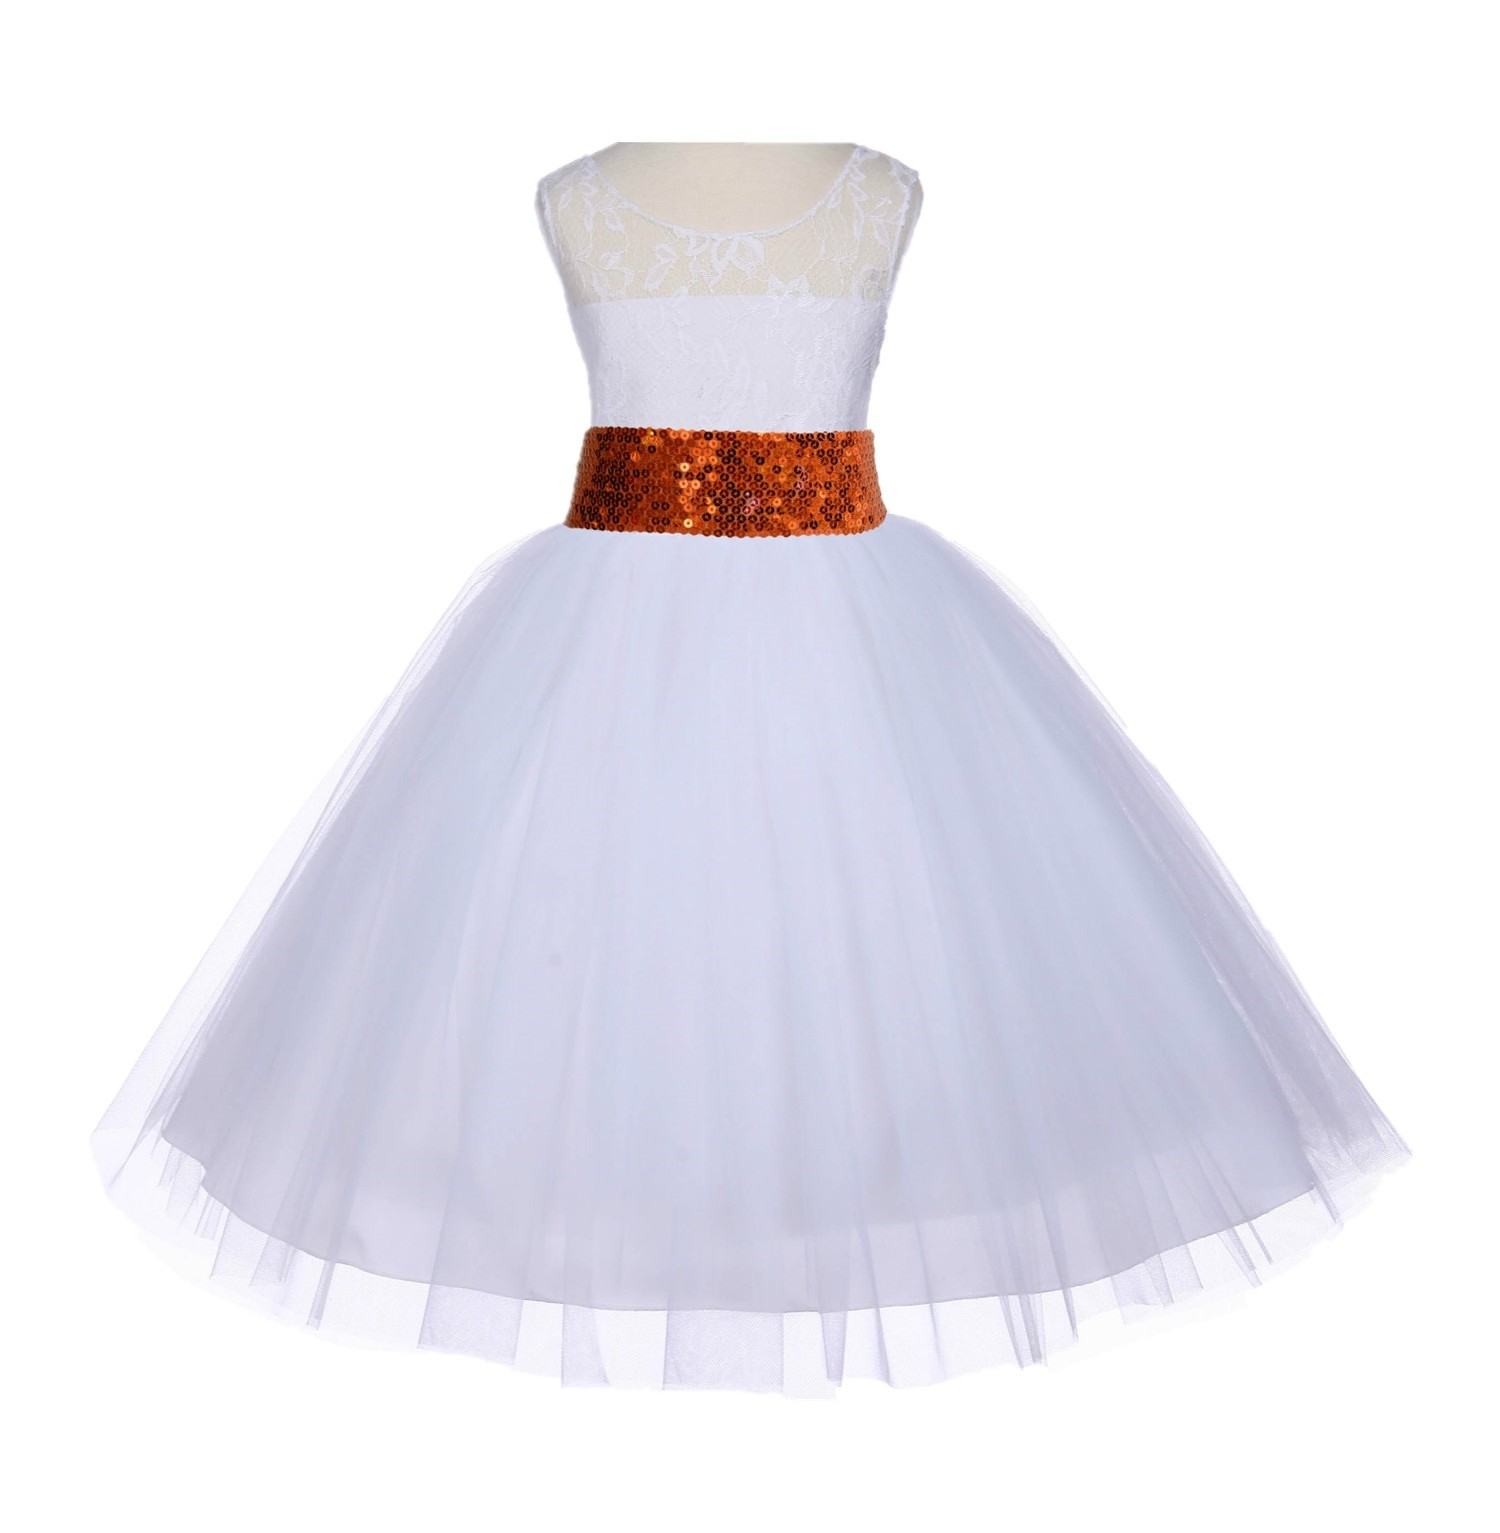 White Floral Lace Bodice Tulle Orange Sequin Flower Girl Dress 153mh